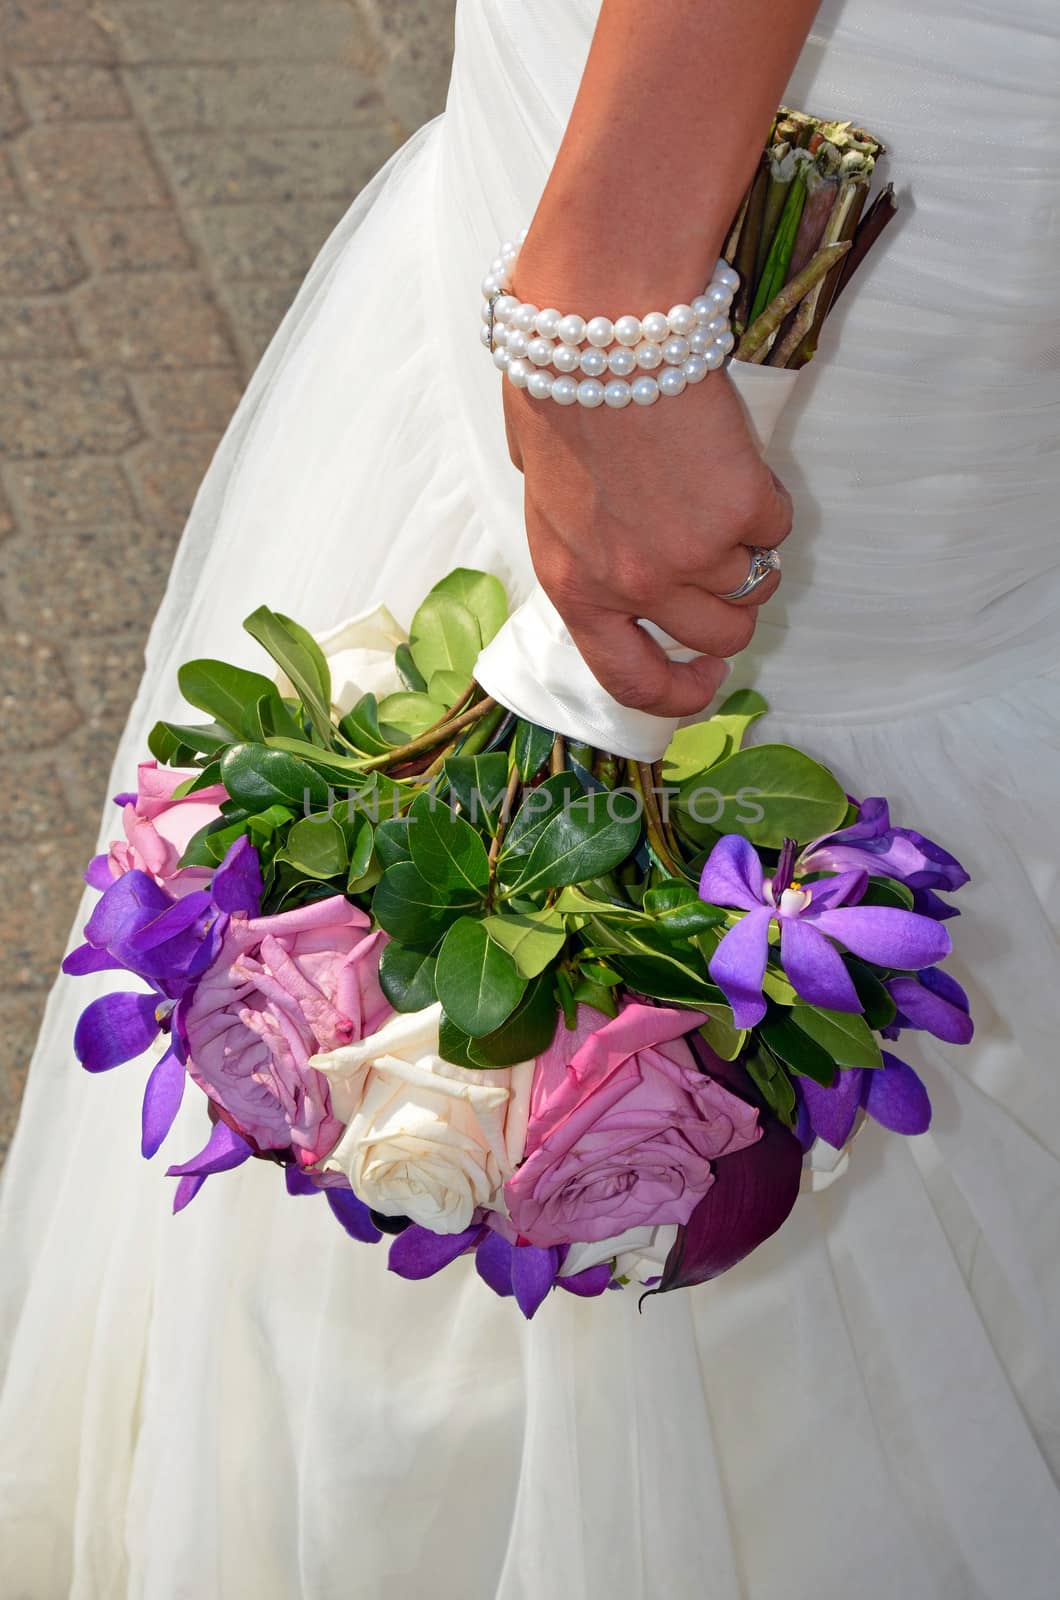 Bride's hand holding colorful bridal bouquet